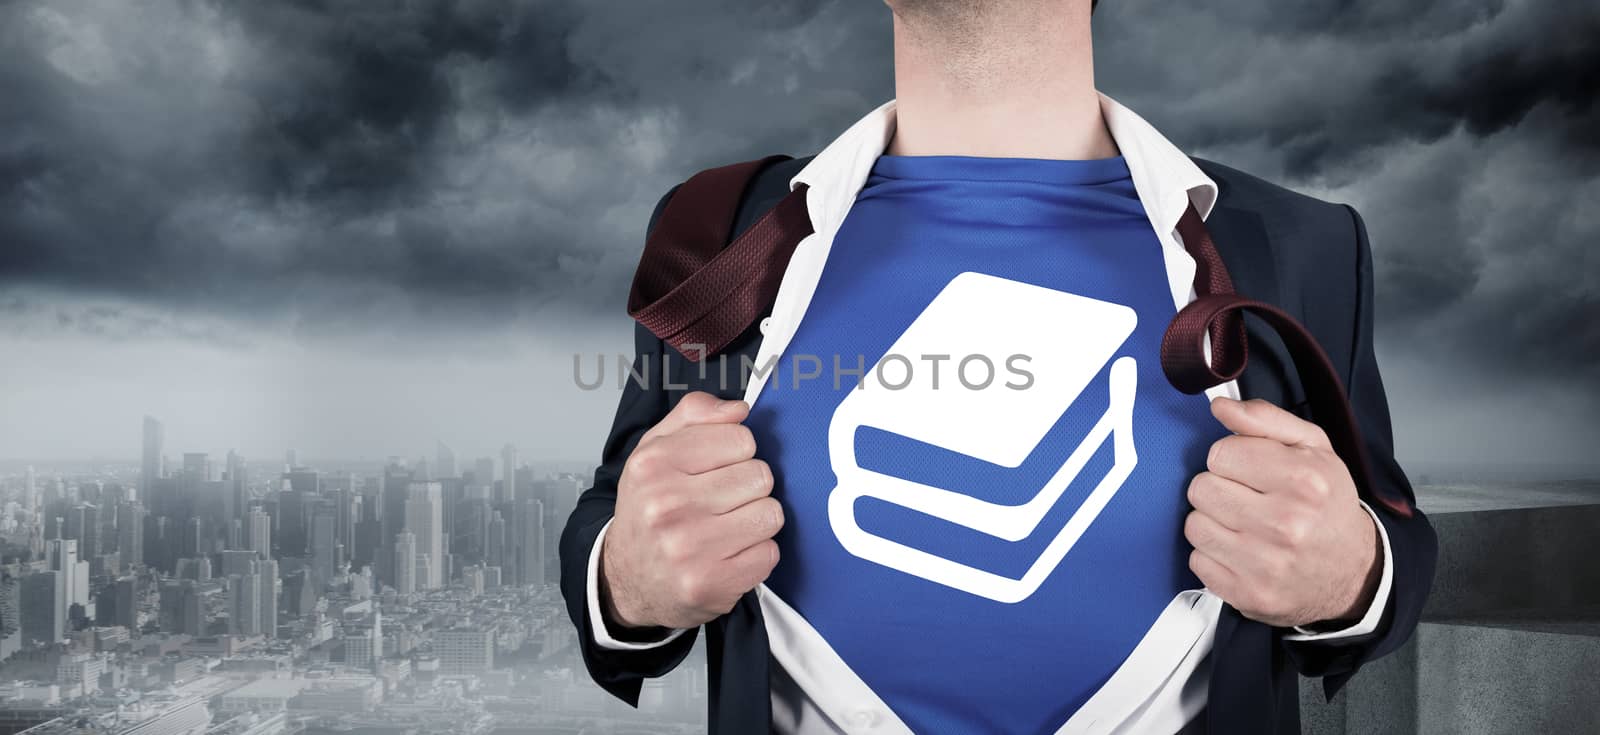 Businessman opening his shirt superhero style against coastline and city